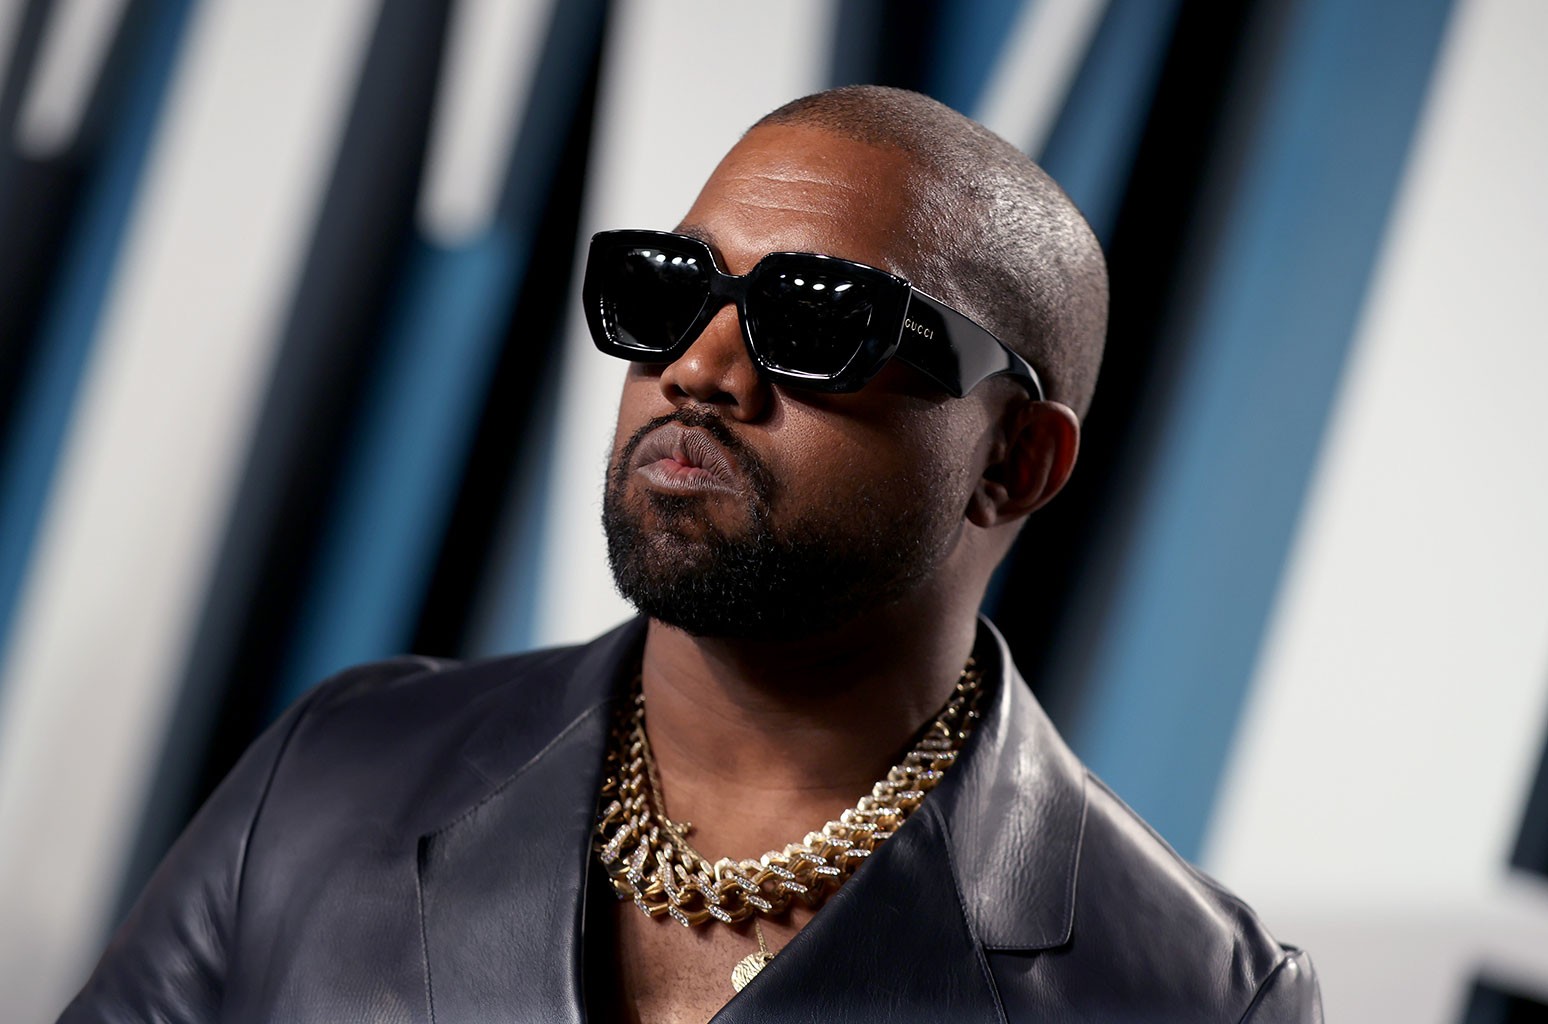 Kanye West a fost suspendat de pe Instagram timp de 24 de ore